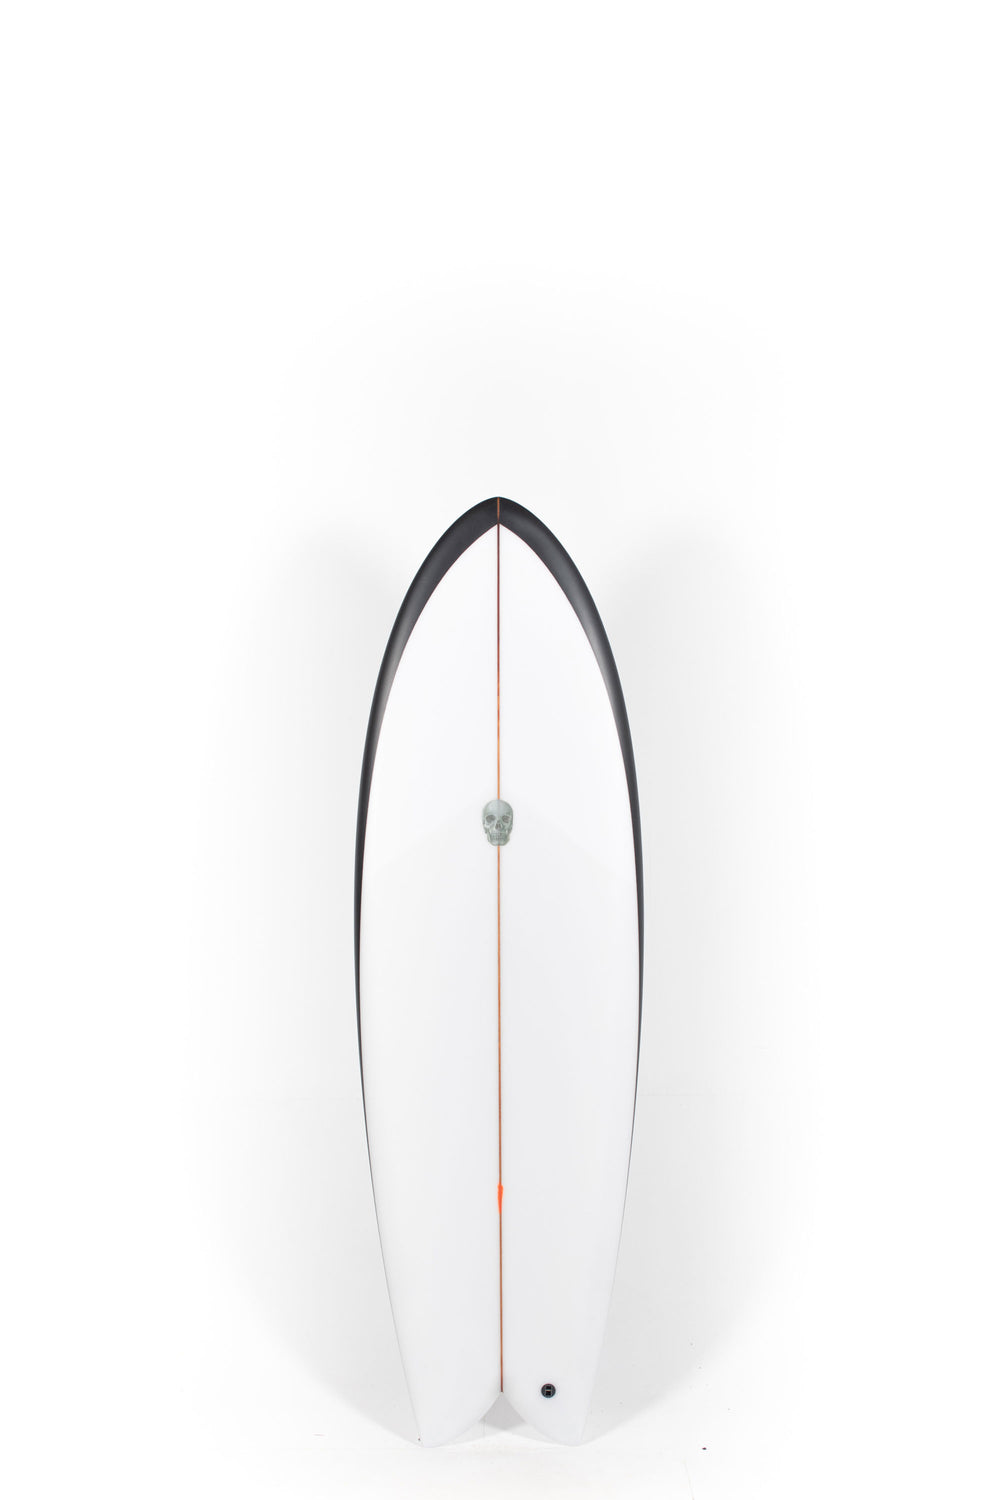 Christenson Surfboards - MYCONAUT - 5'9